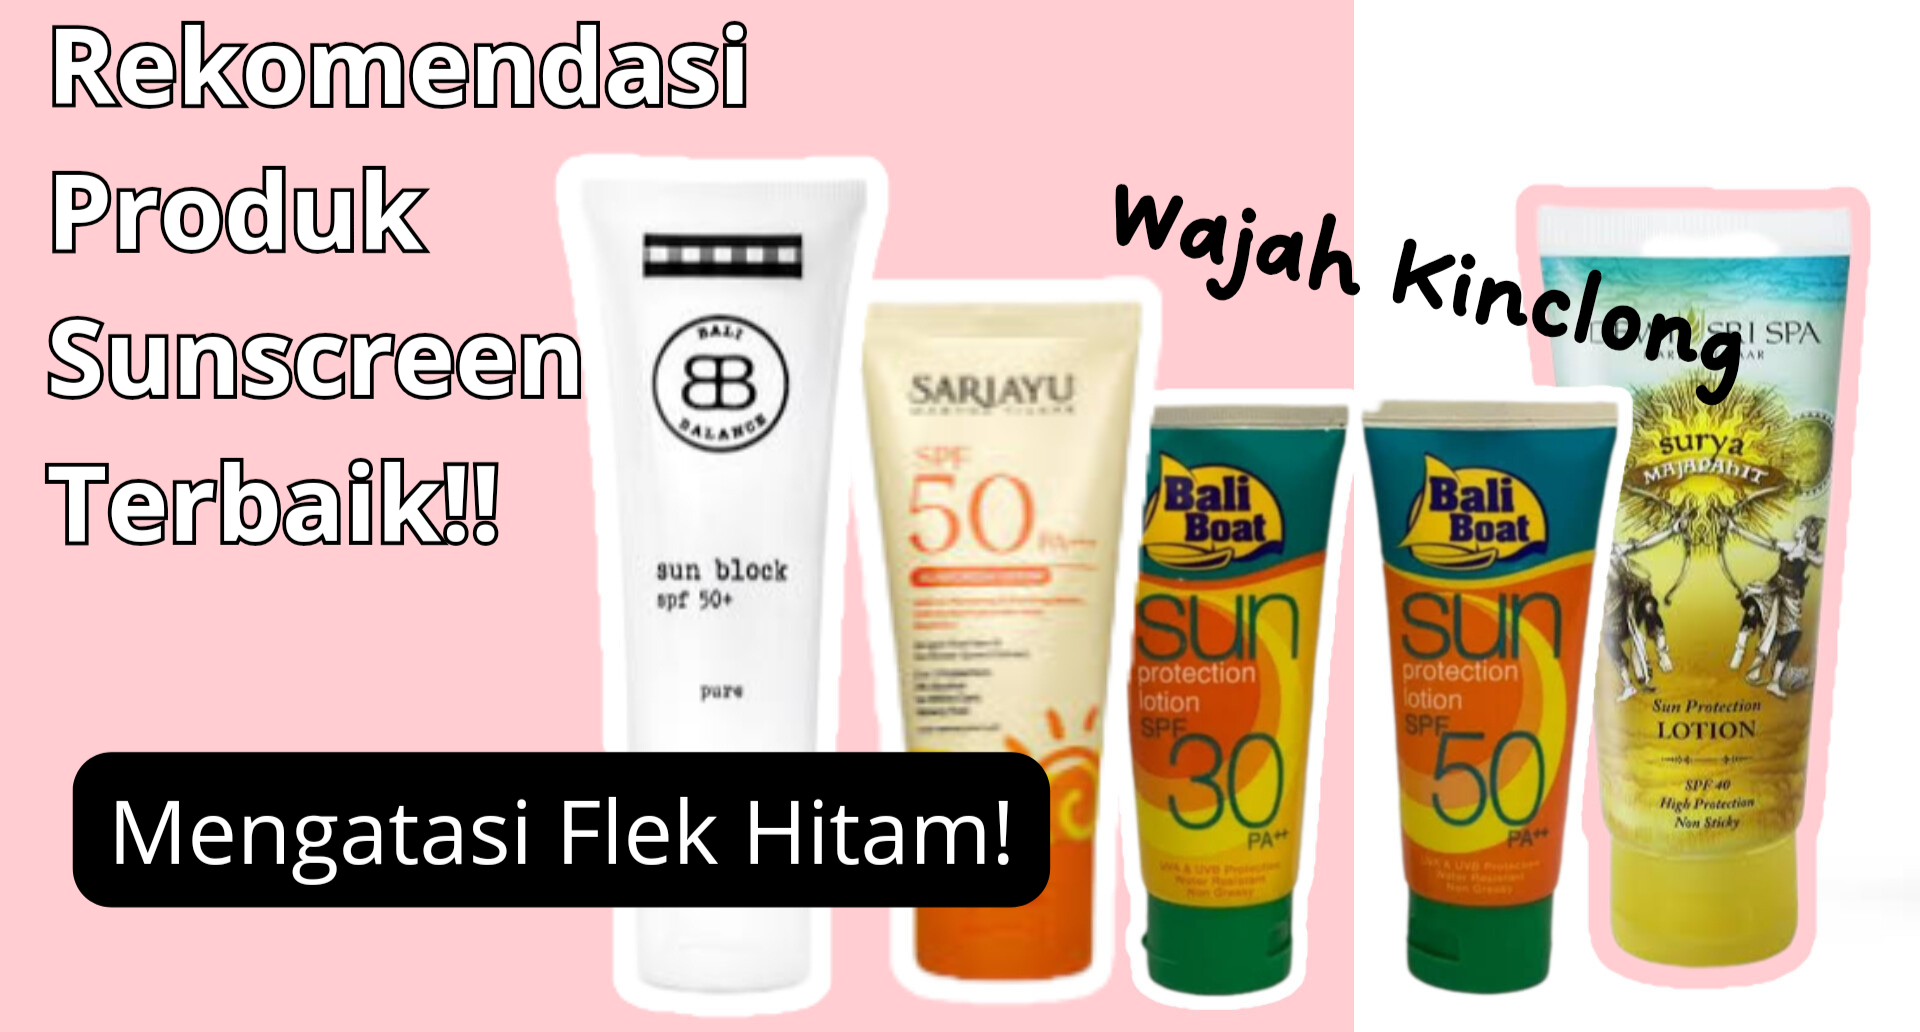 7 Rekomendasi Produk Sunscreen Terbaik Mengatasi Flek Hitam Di Wajah, Kulit Langsung Kinclong Bebas Noda!